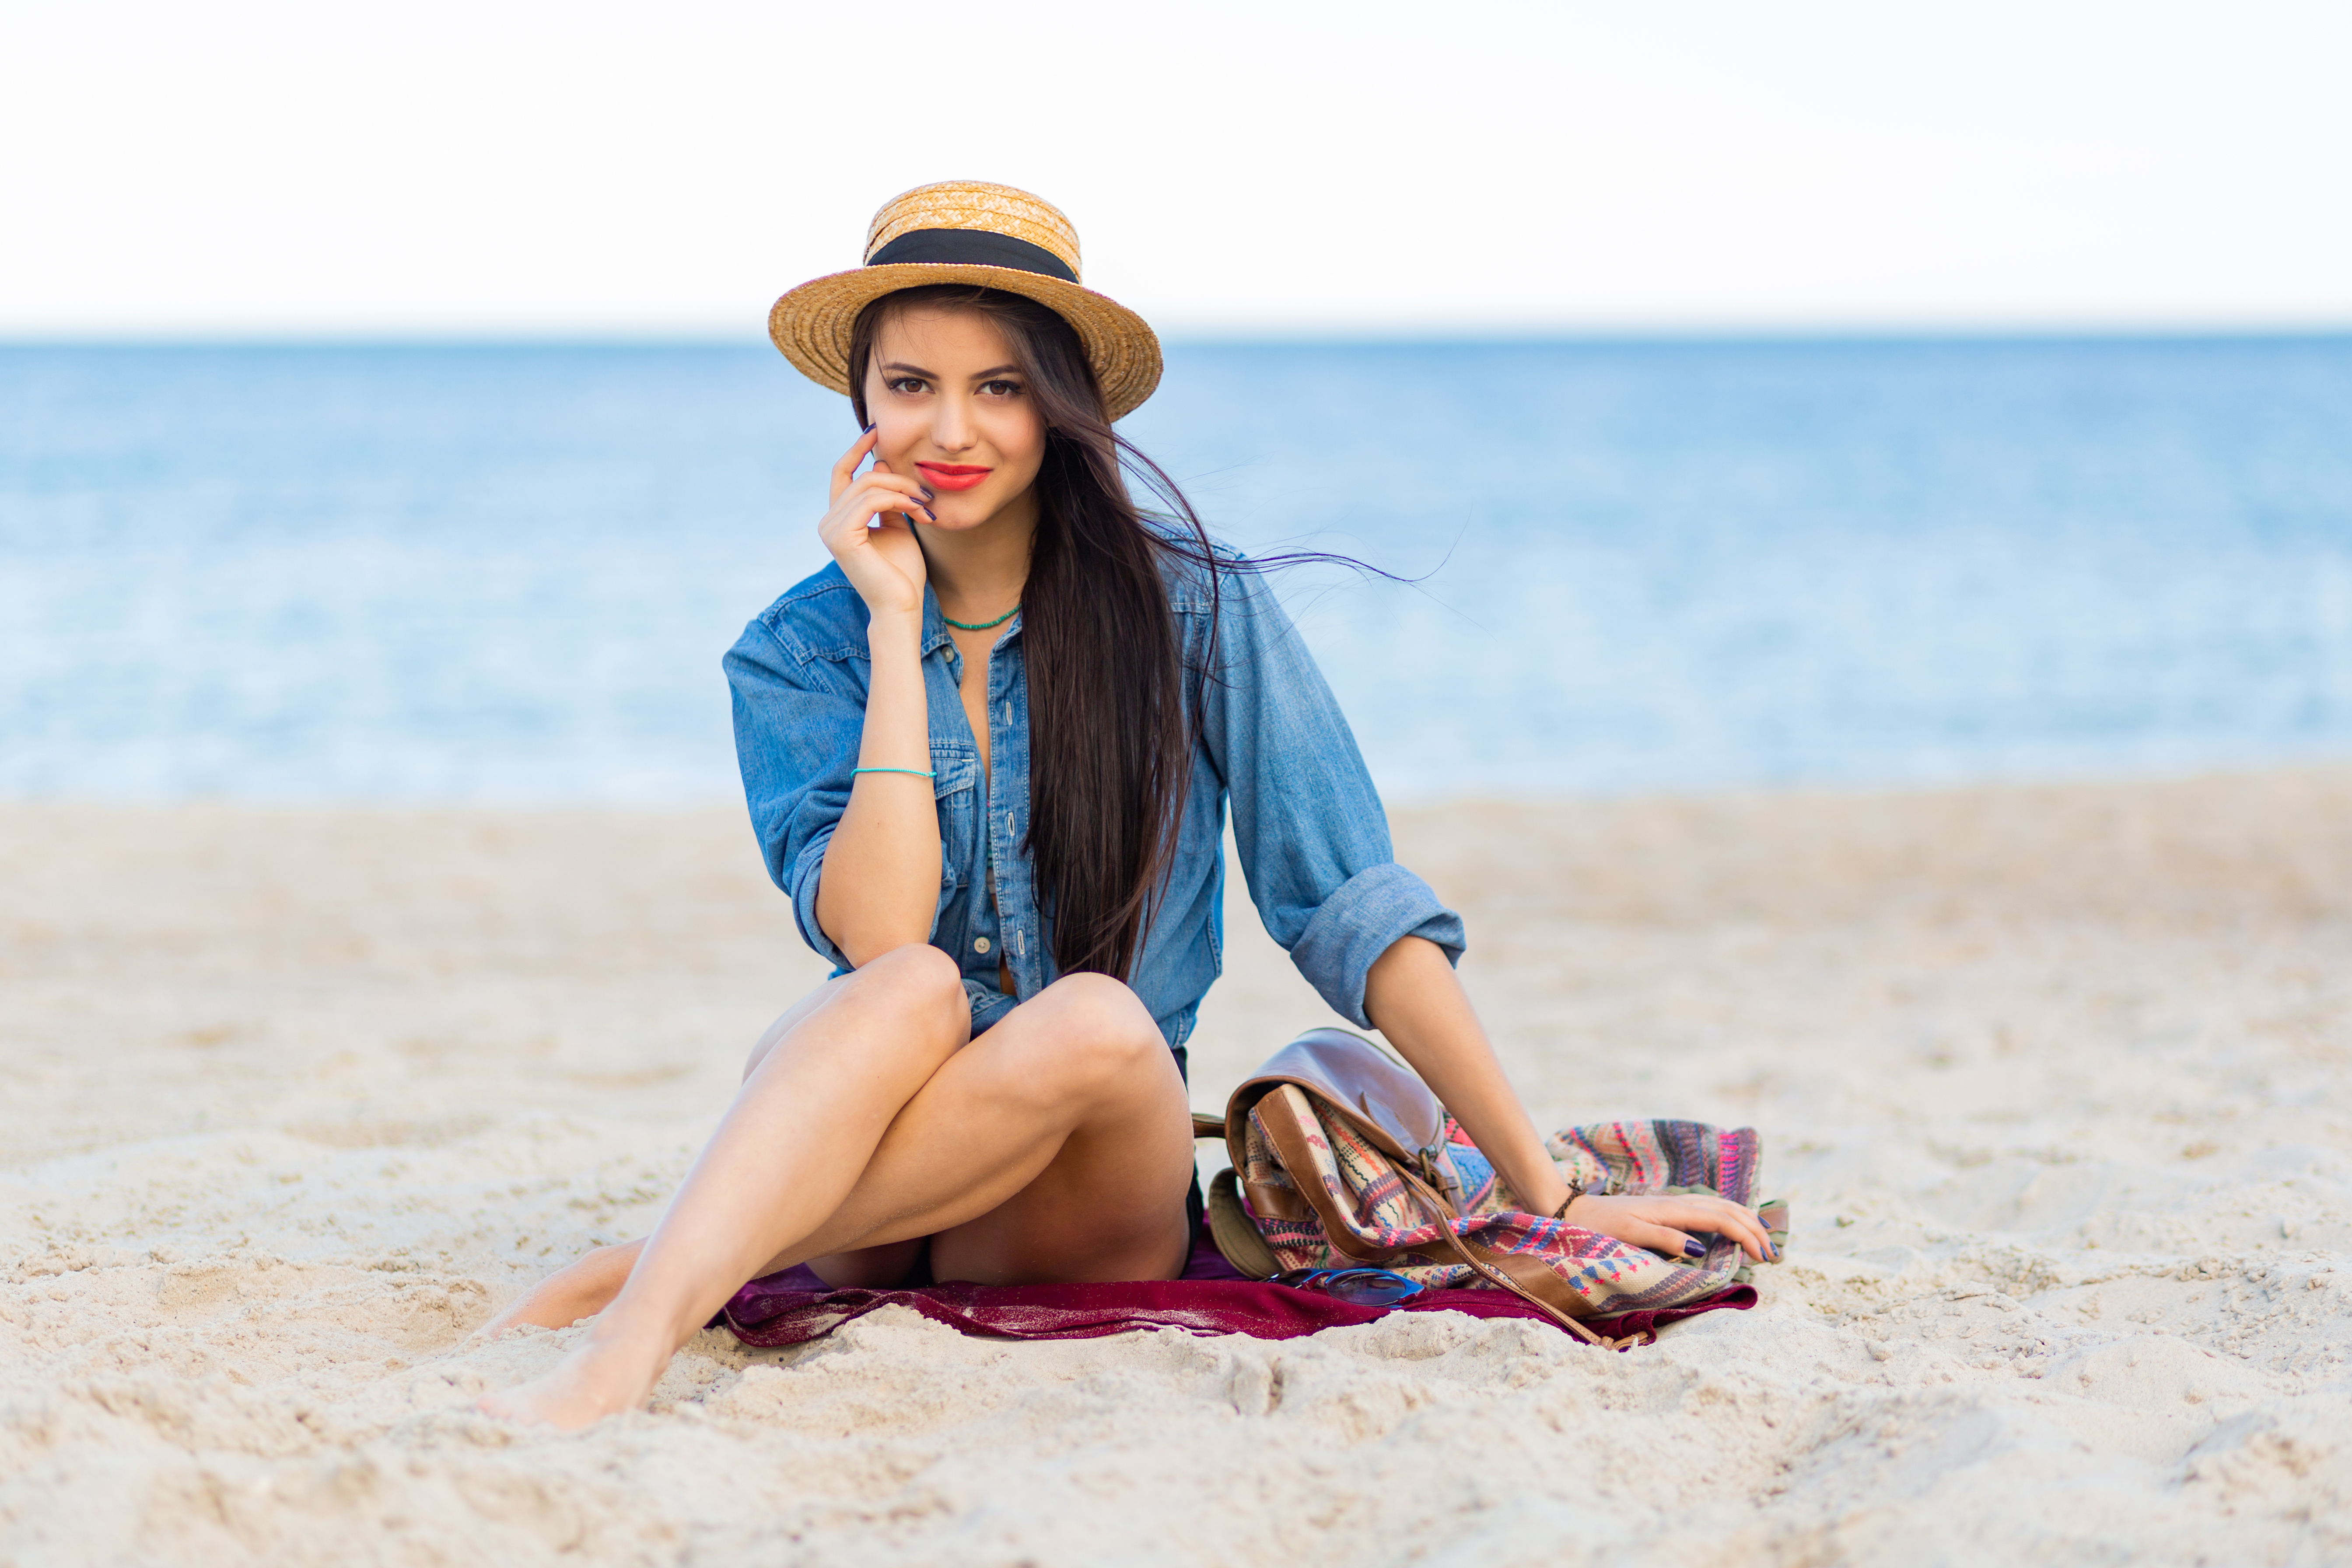 Women Outdoors Model Beach Red Lipstick Shorts Straw Hat Hand On Face Brunette 5376x3584